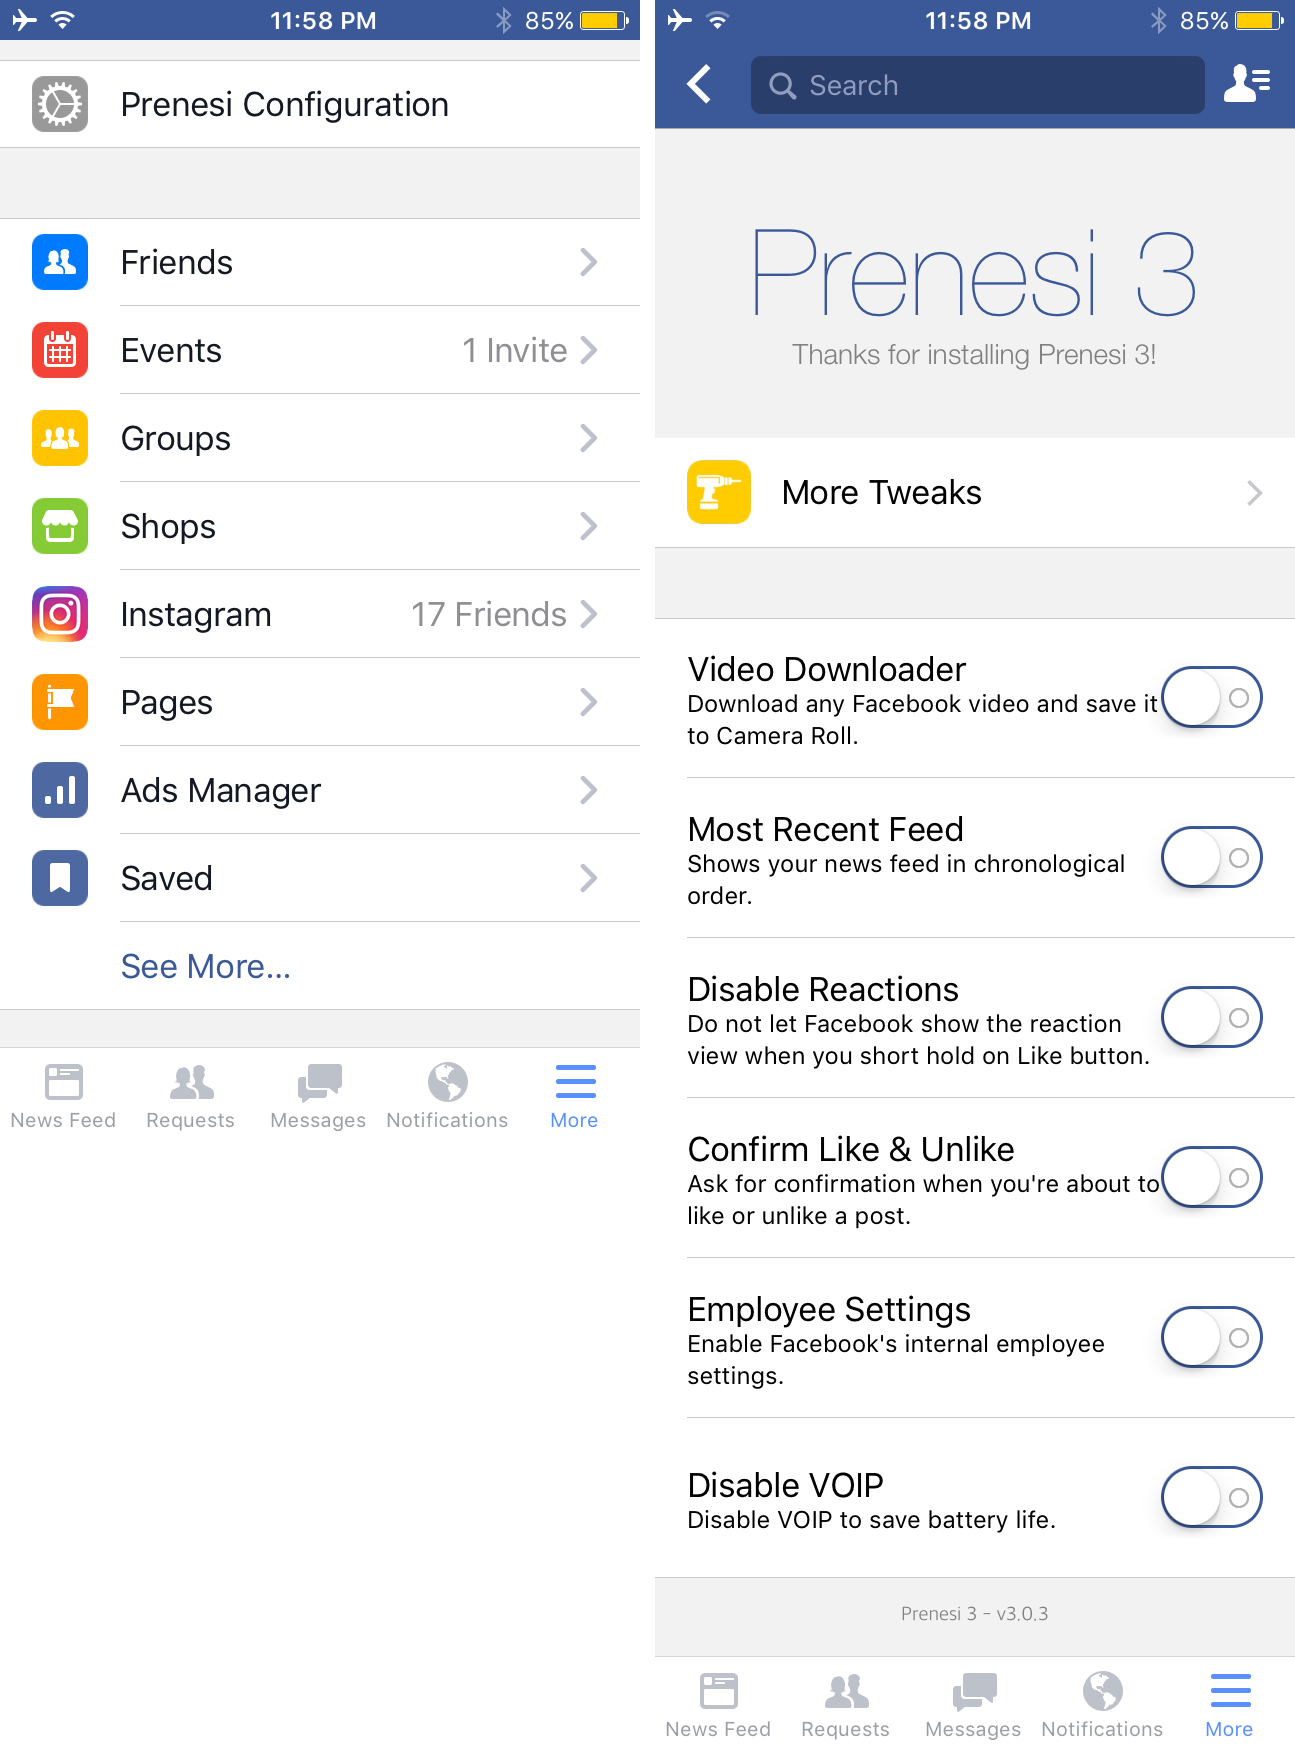 Prenesi 3 Facebook in app settings